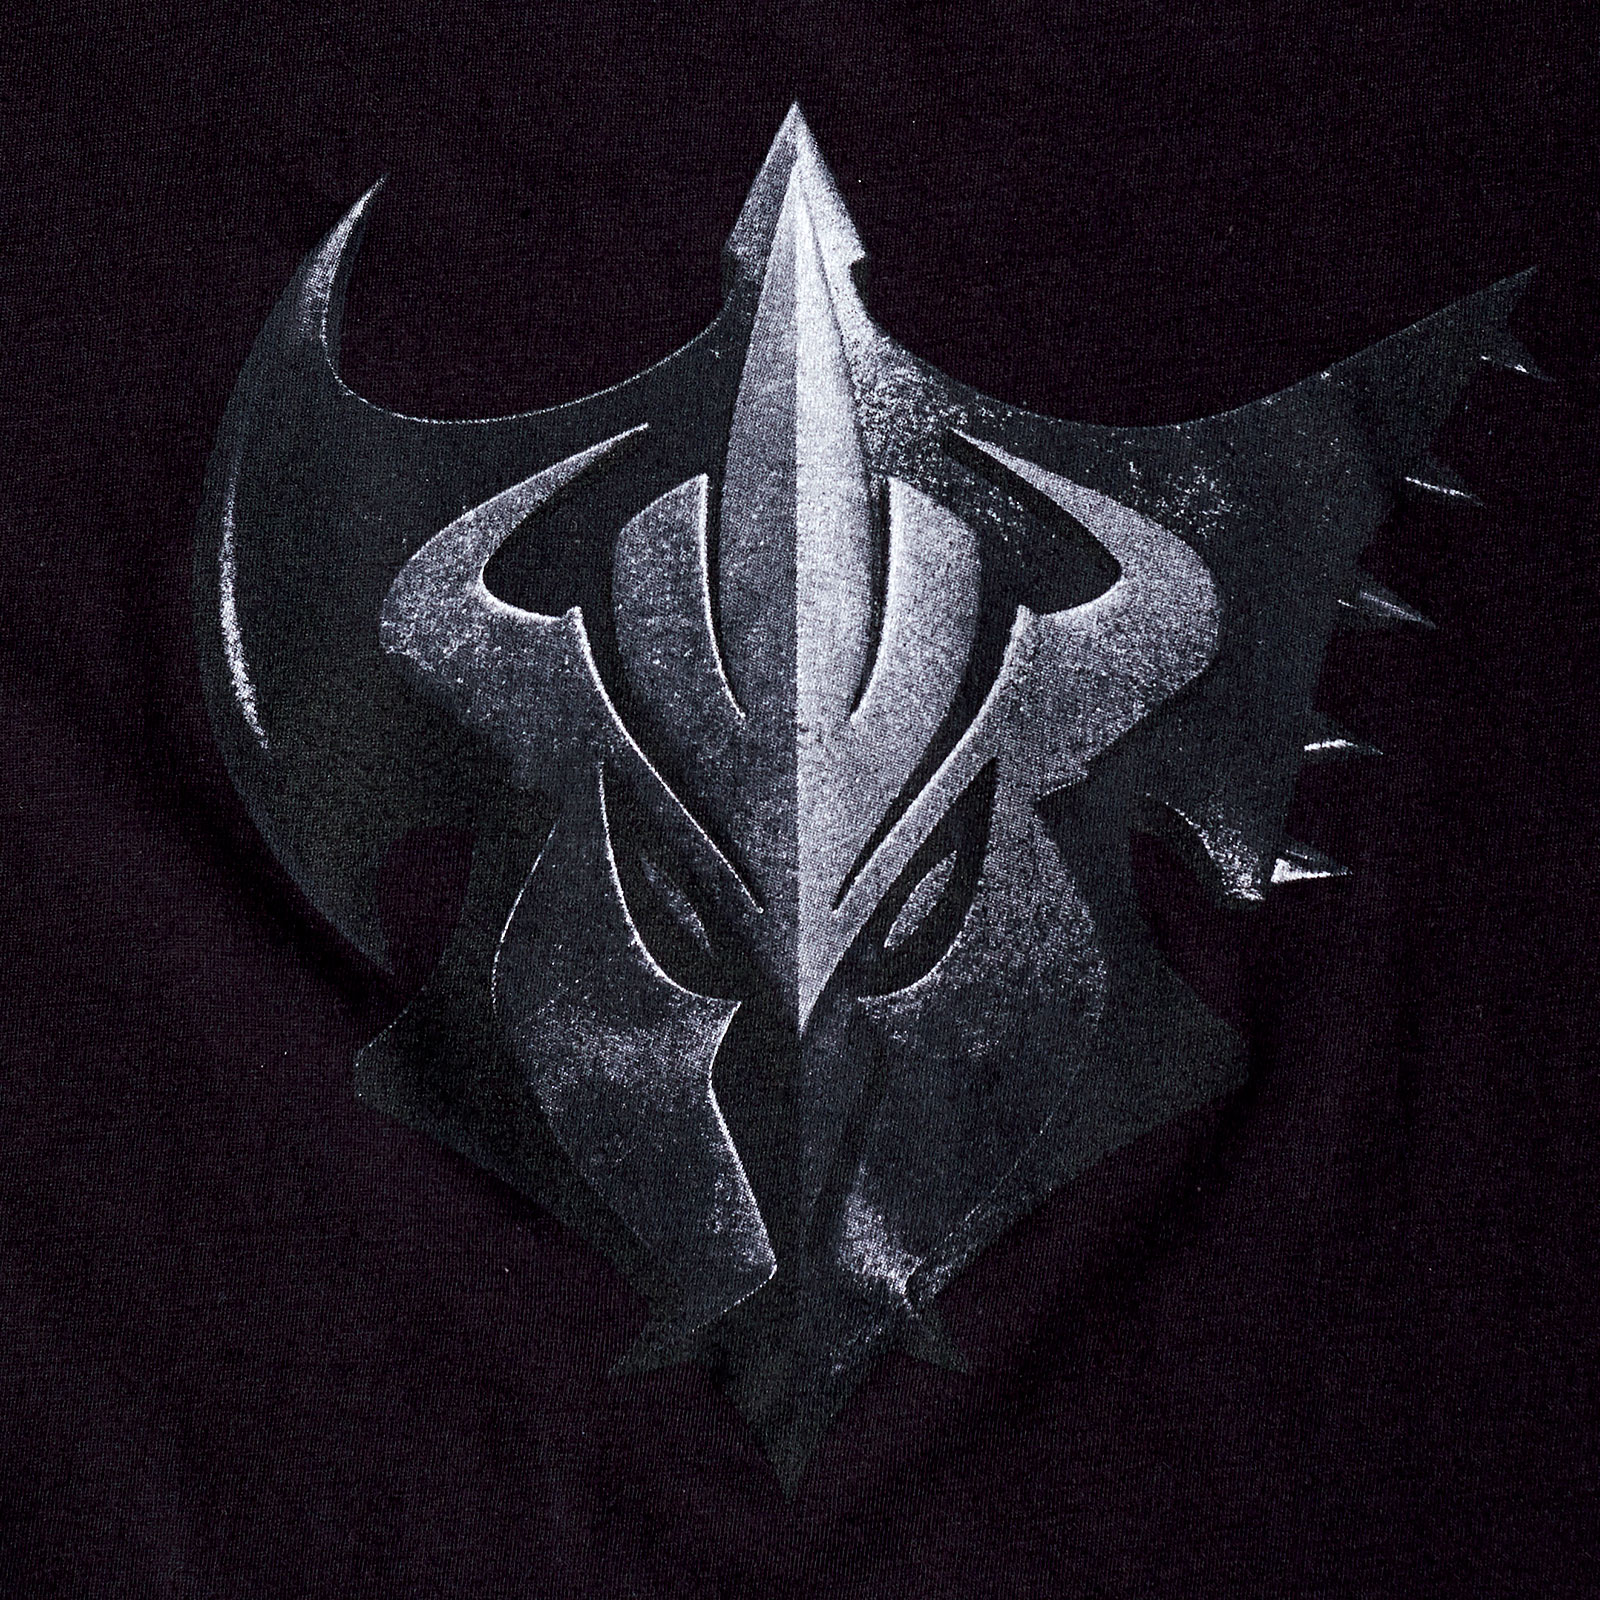 League of Legends - Pentakill T-Shirt Black